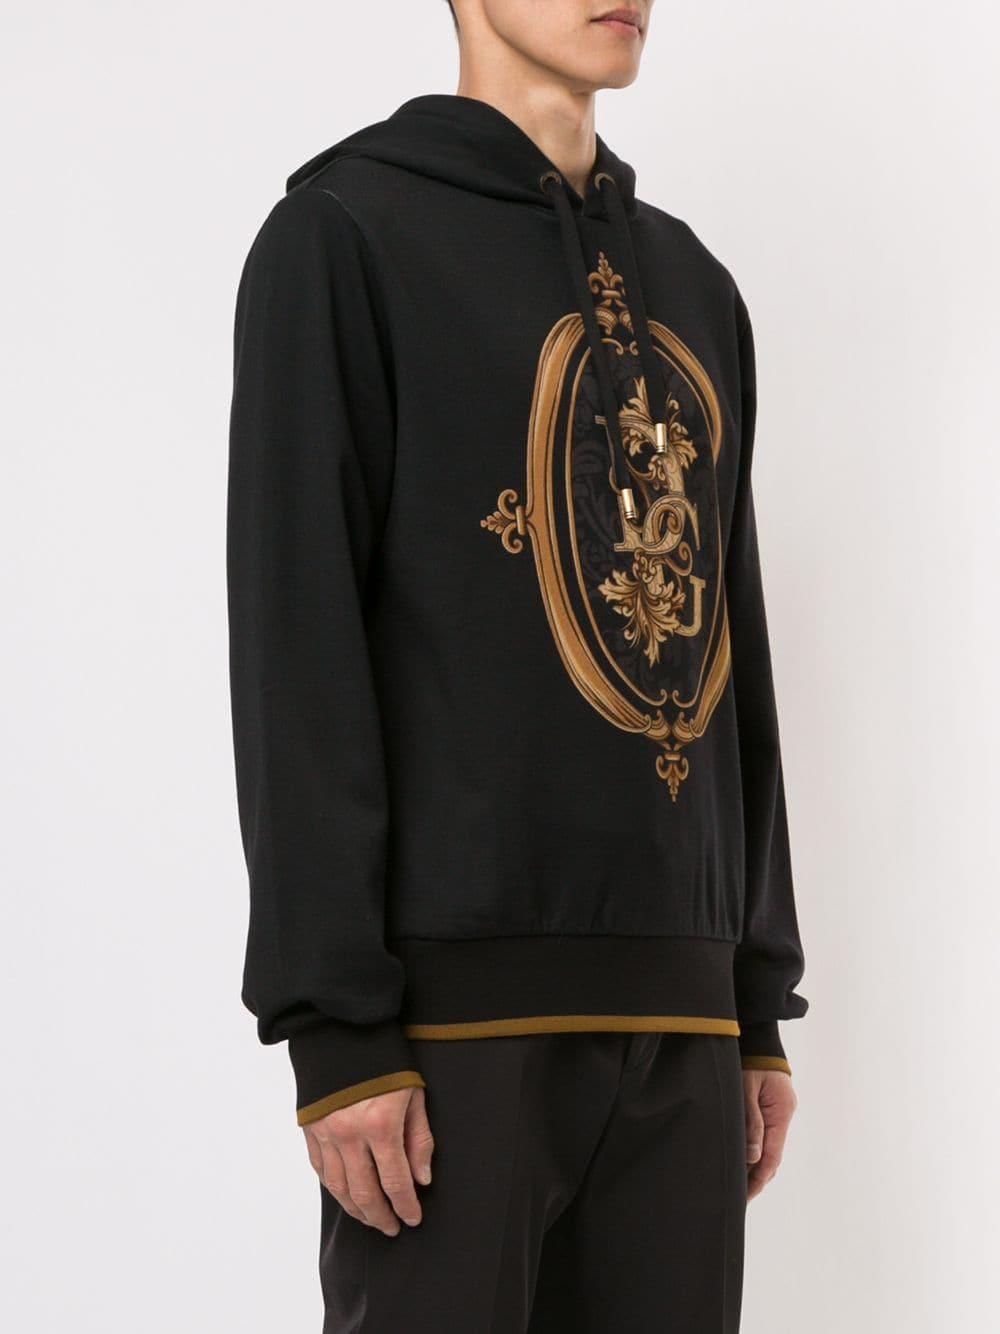 Dolce & Gabbana Cotton Logo Printed Hoodie in Black for Men - Lyst